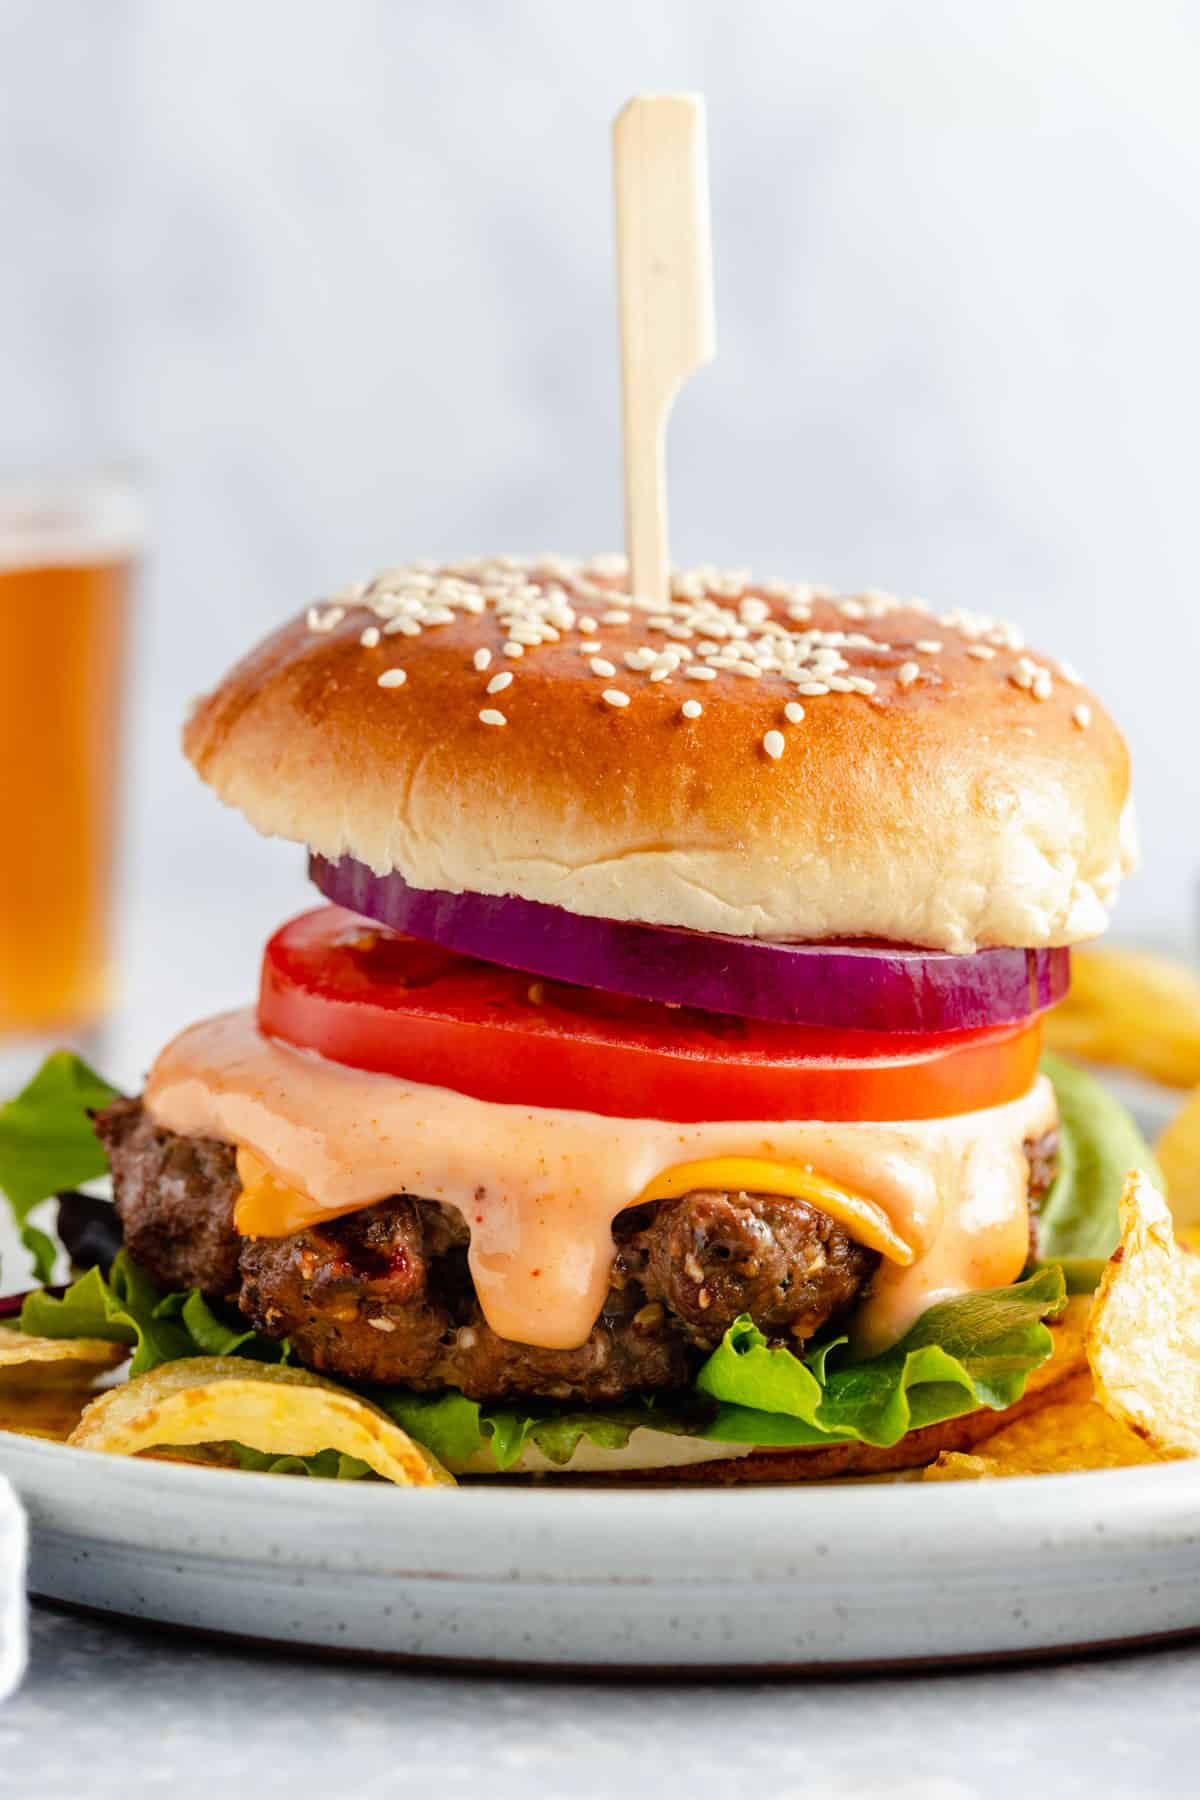 https://www.kimscravings.com/wp-content/uploads/2021/06/Healthy-Burgers-3.jpg